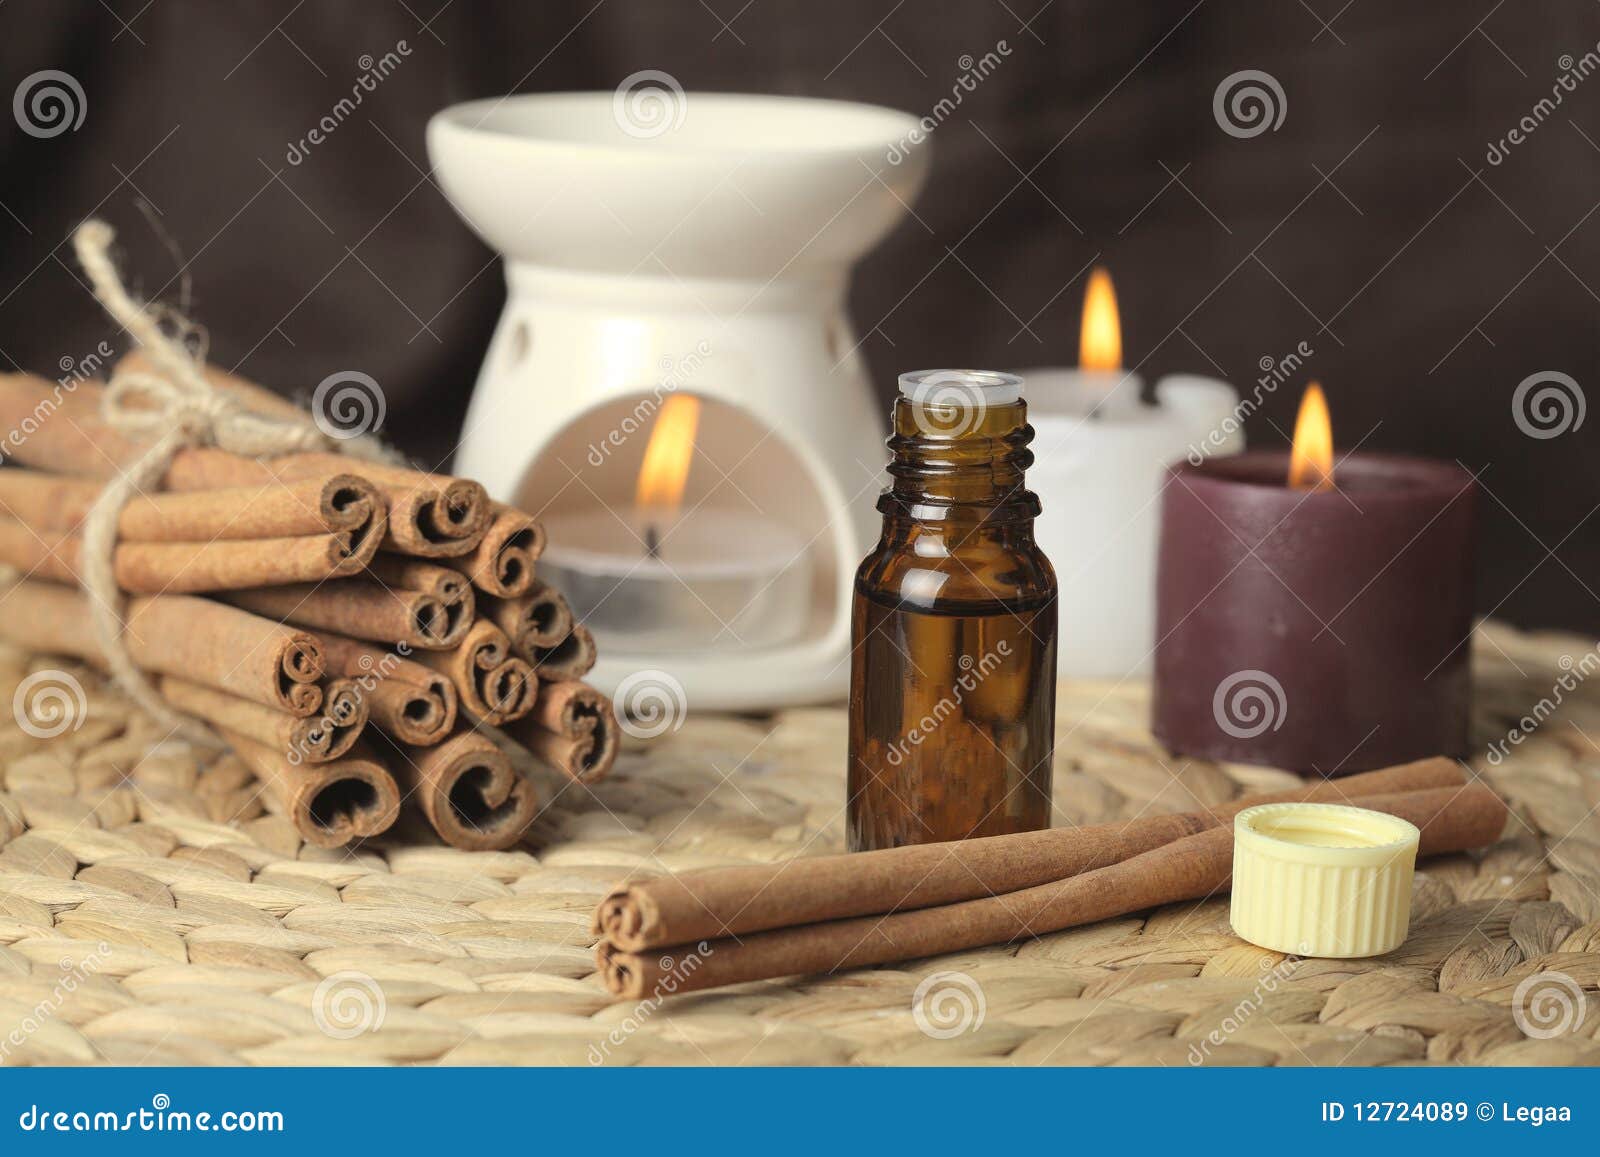 aromatherapy - candles and cinnamon